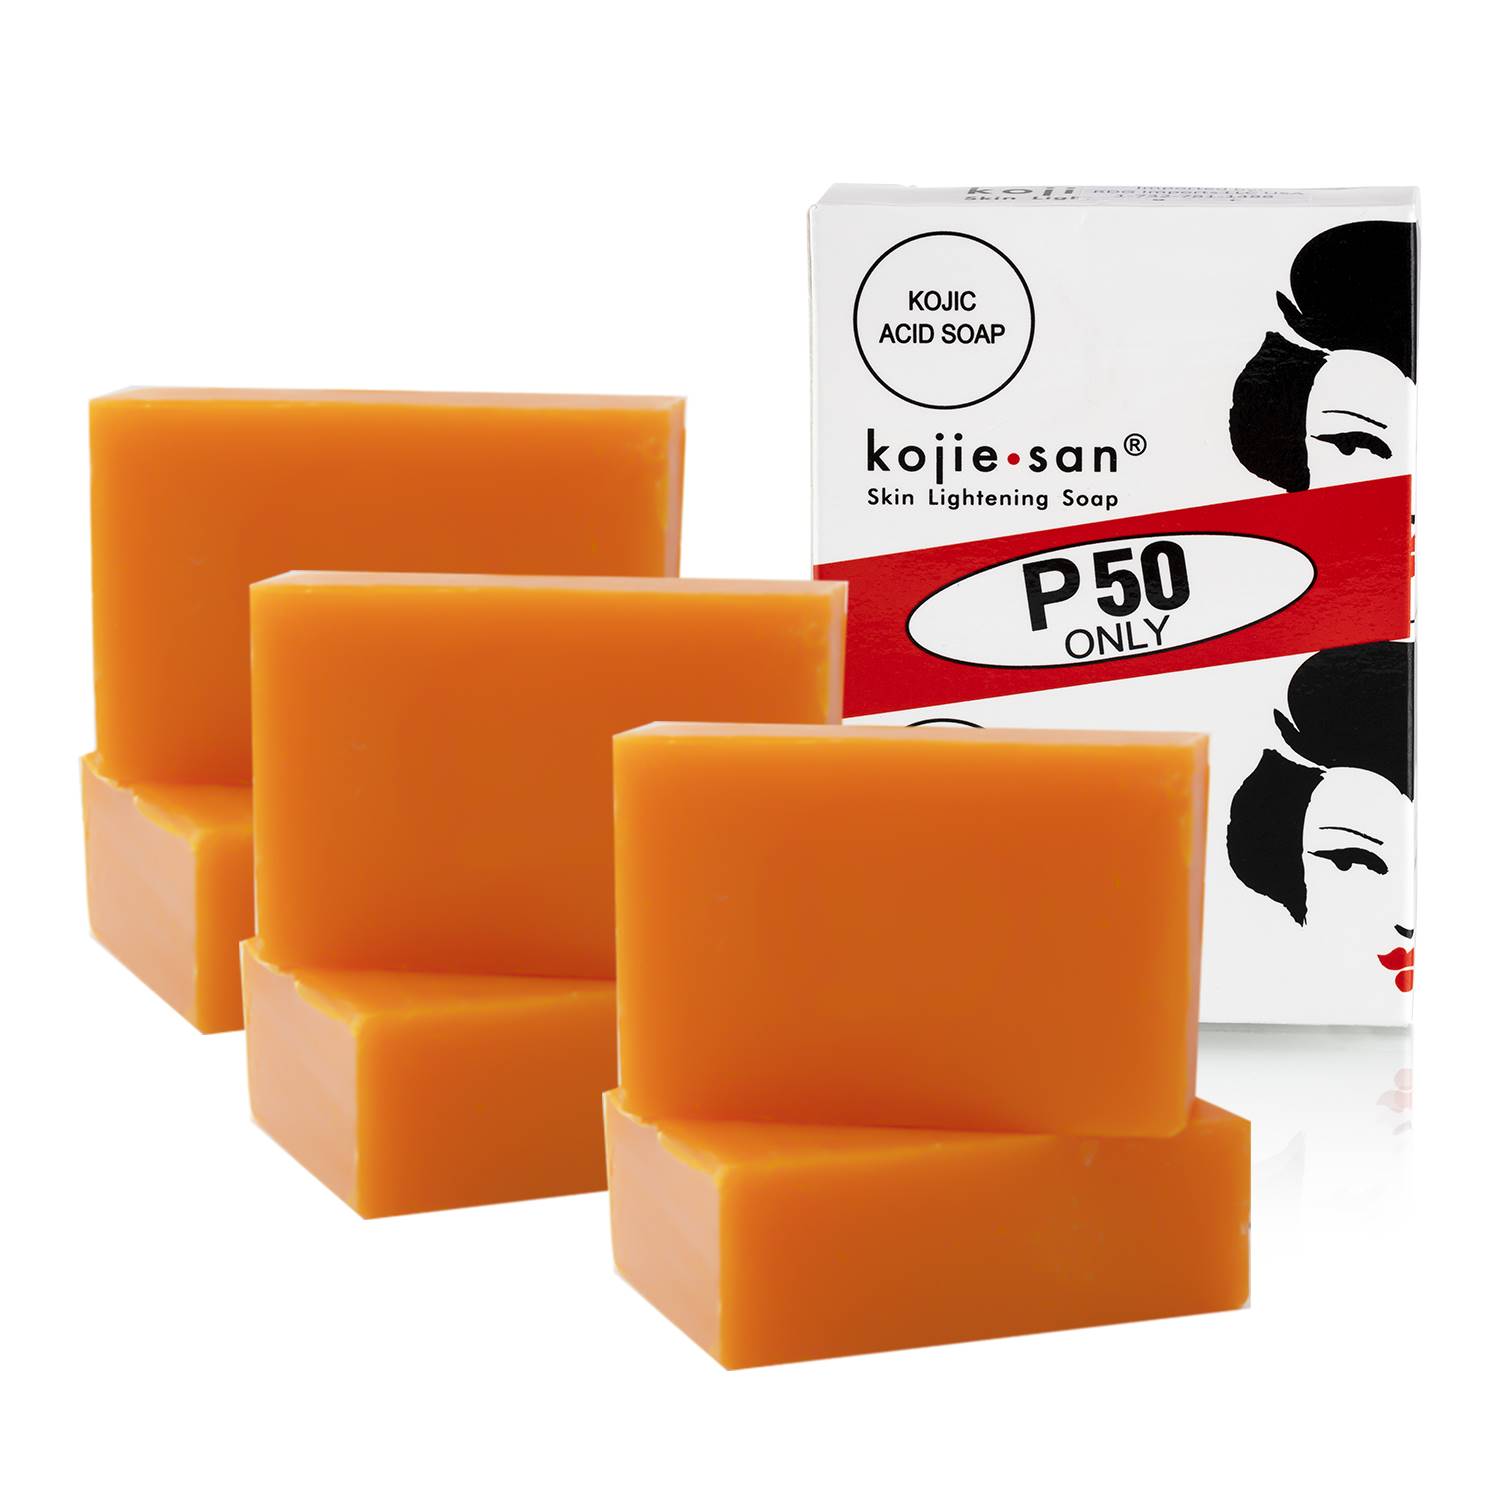 Kojie San Skin Lightening Soap reviews